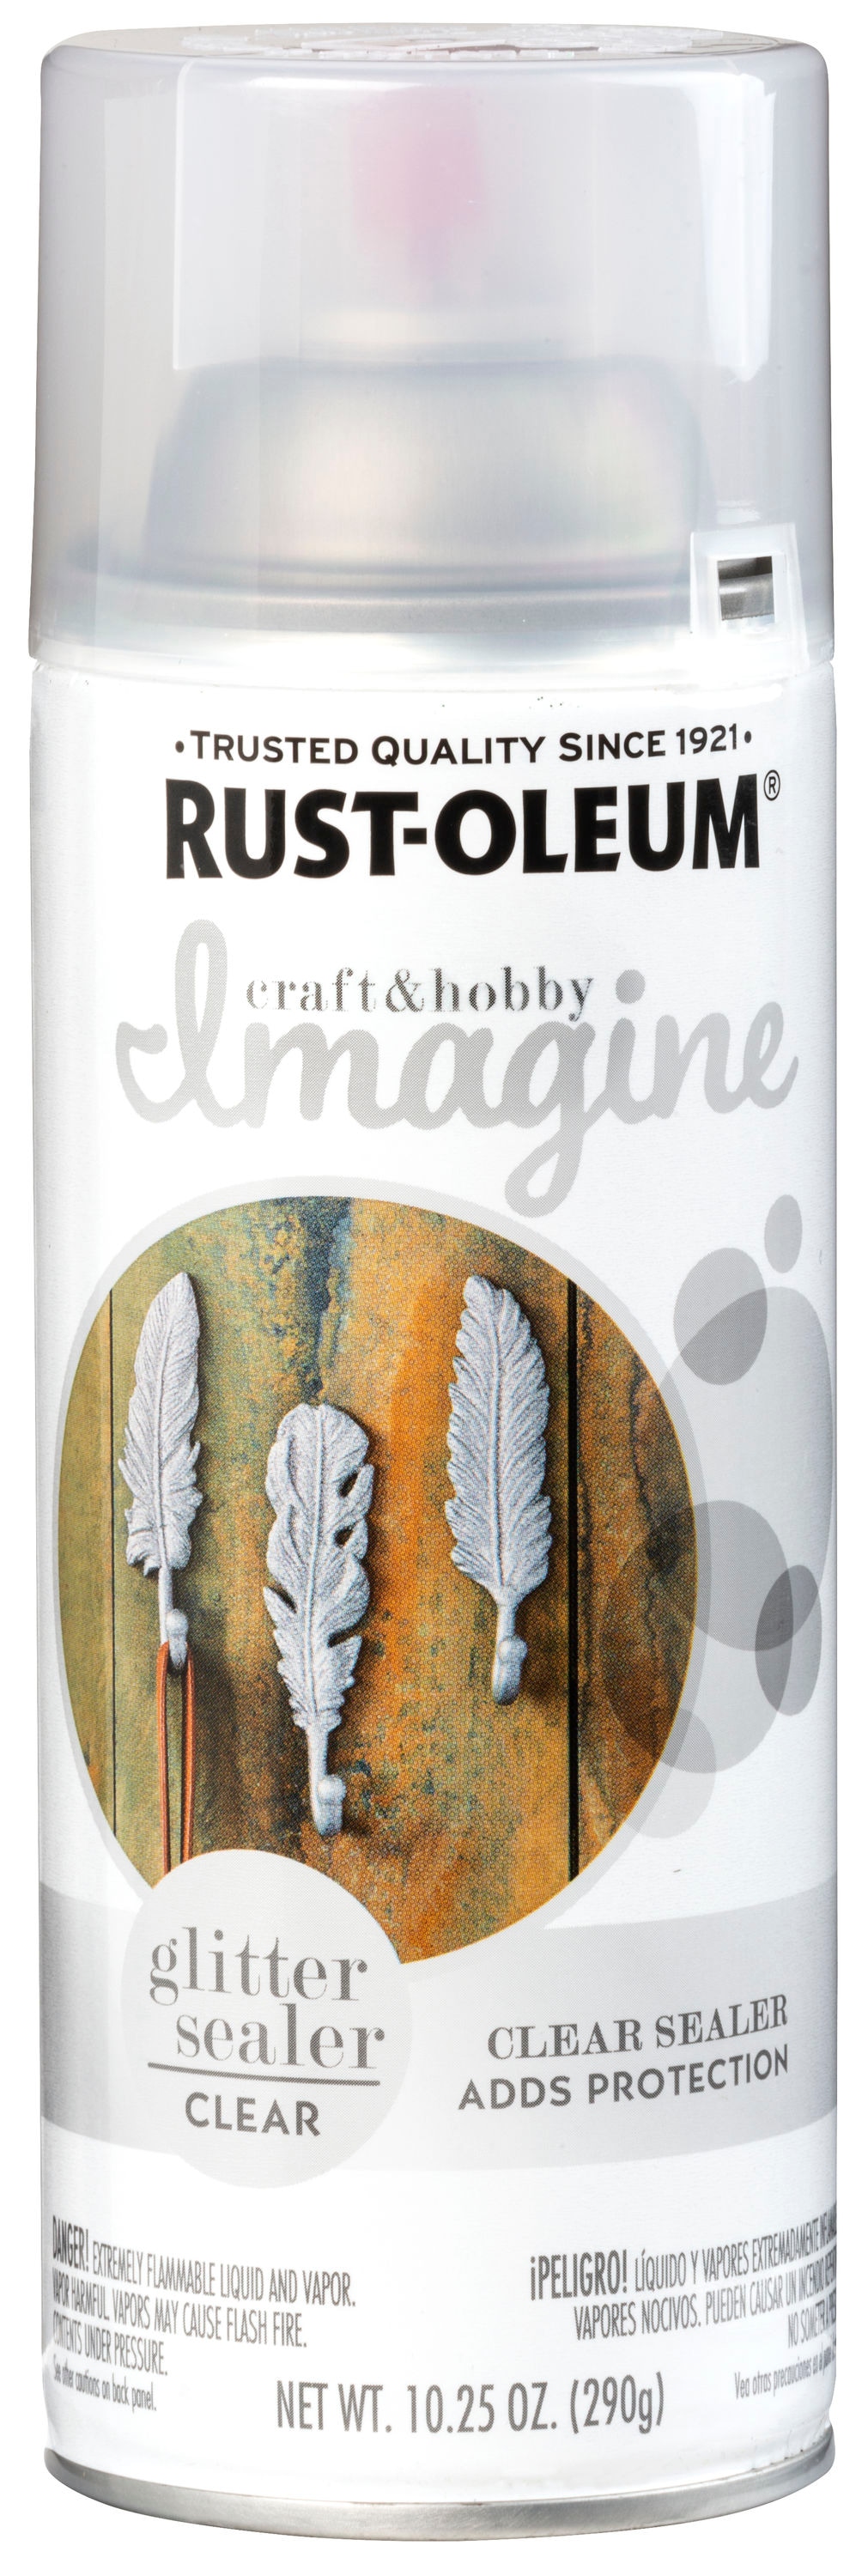 Rust-Oleum Imagine Craft & Hobby 10.25 Oz. Intense Turquoise